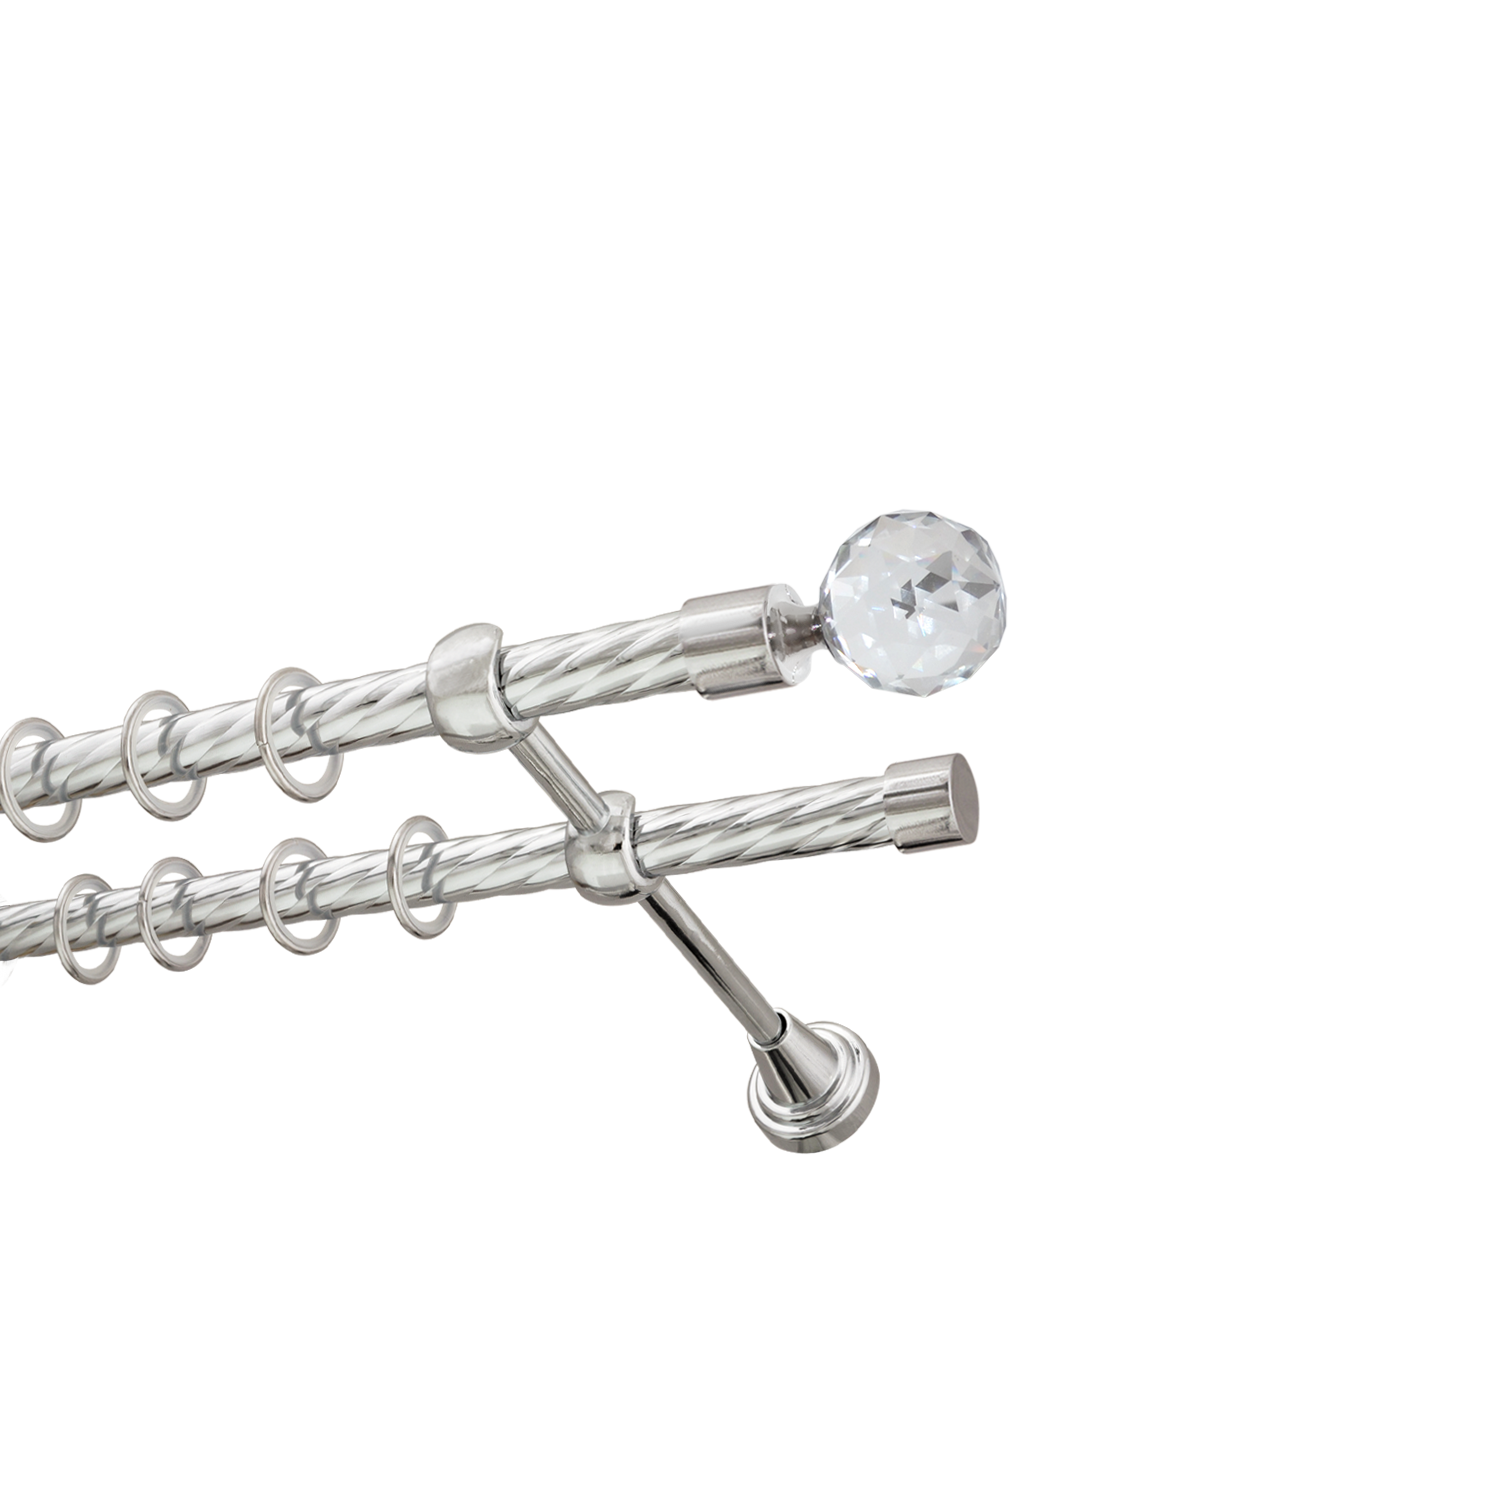 Металлический карниз для штор Карат, двухрядный 16/16 мм, серебро, витая штанга, длина 240 см - фото Wikidecor.ru